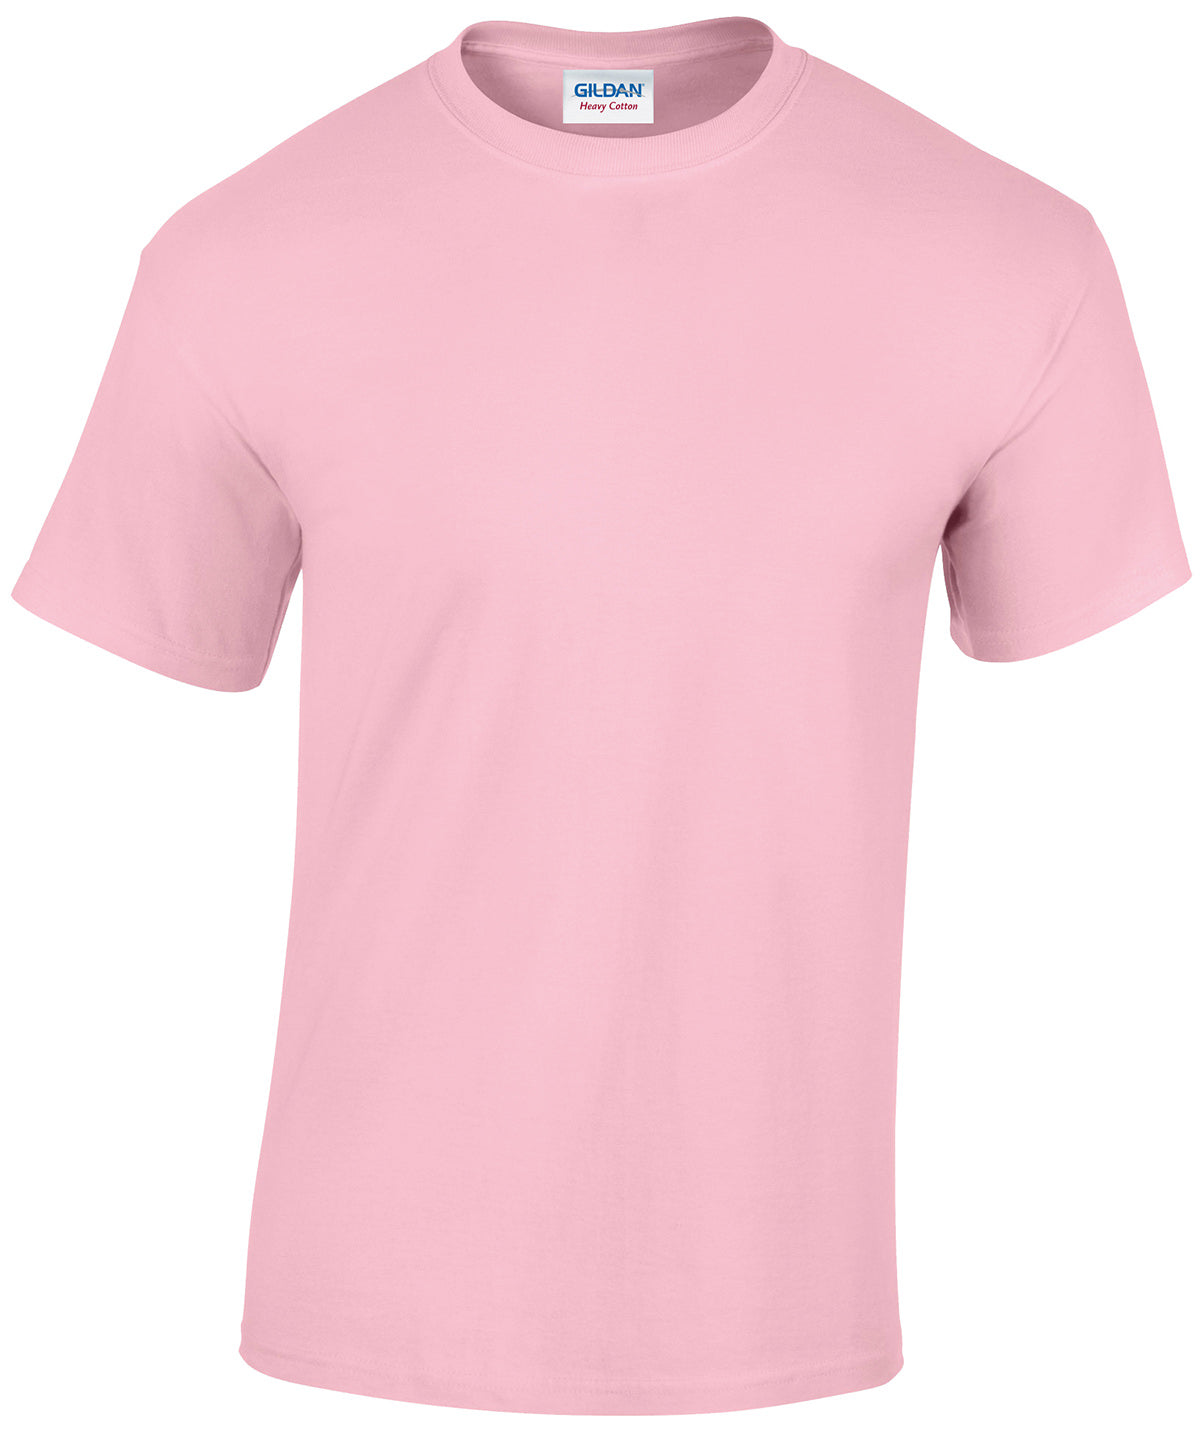 Personalised T-Shirts - Royal Gildan Heavy Cotton™ adult t-shirt